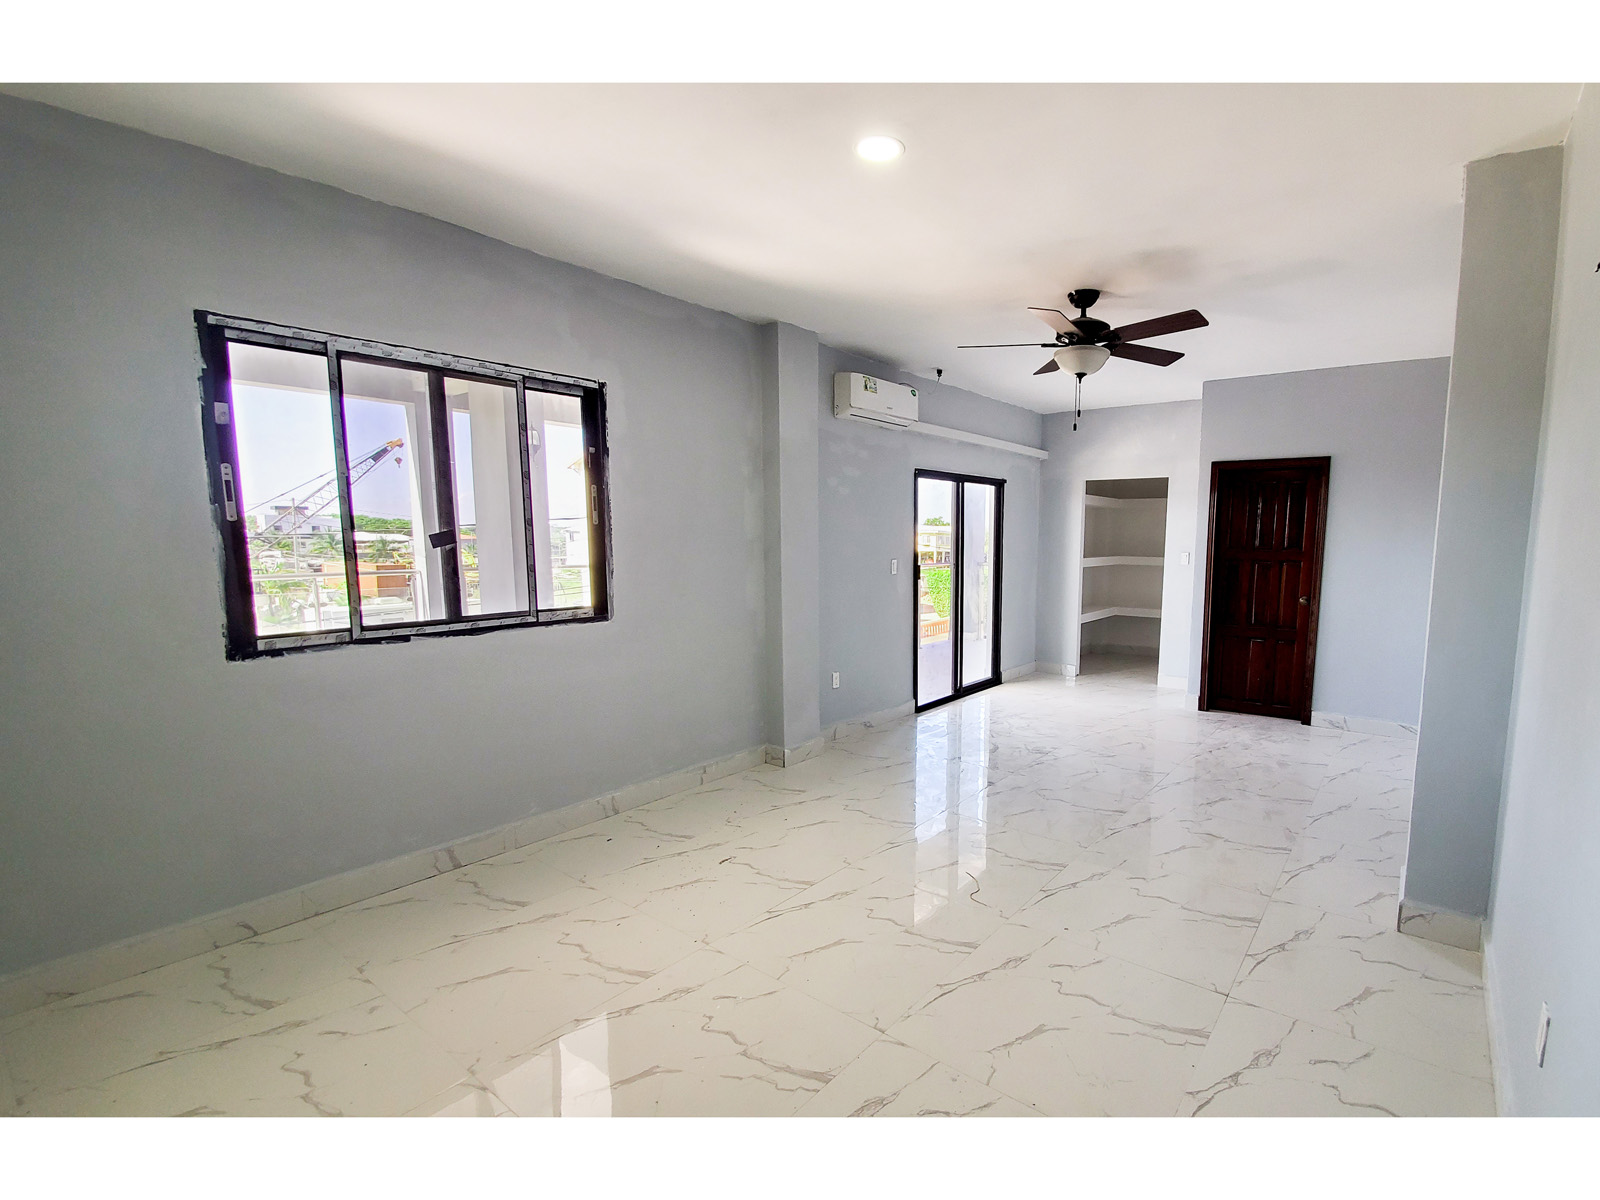 Modern 3 bedroom 2.5 bathroom apartment for Rent in Belize City